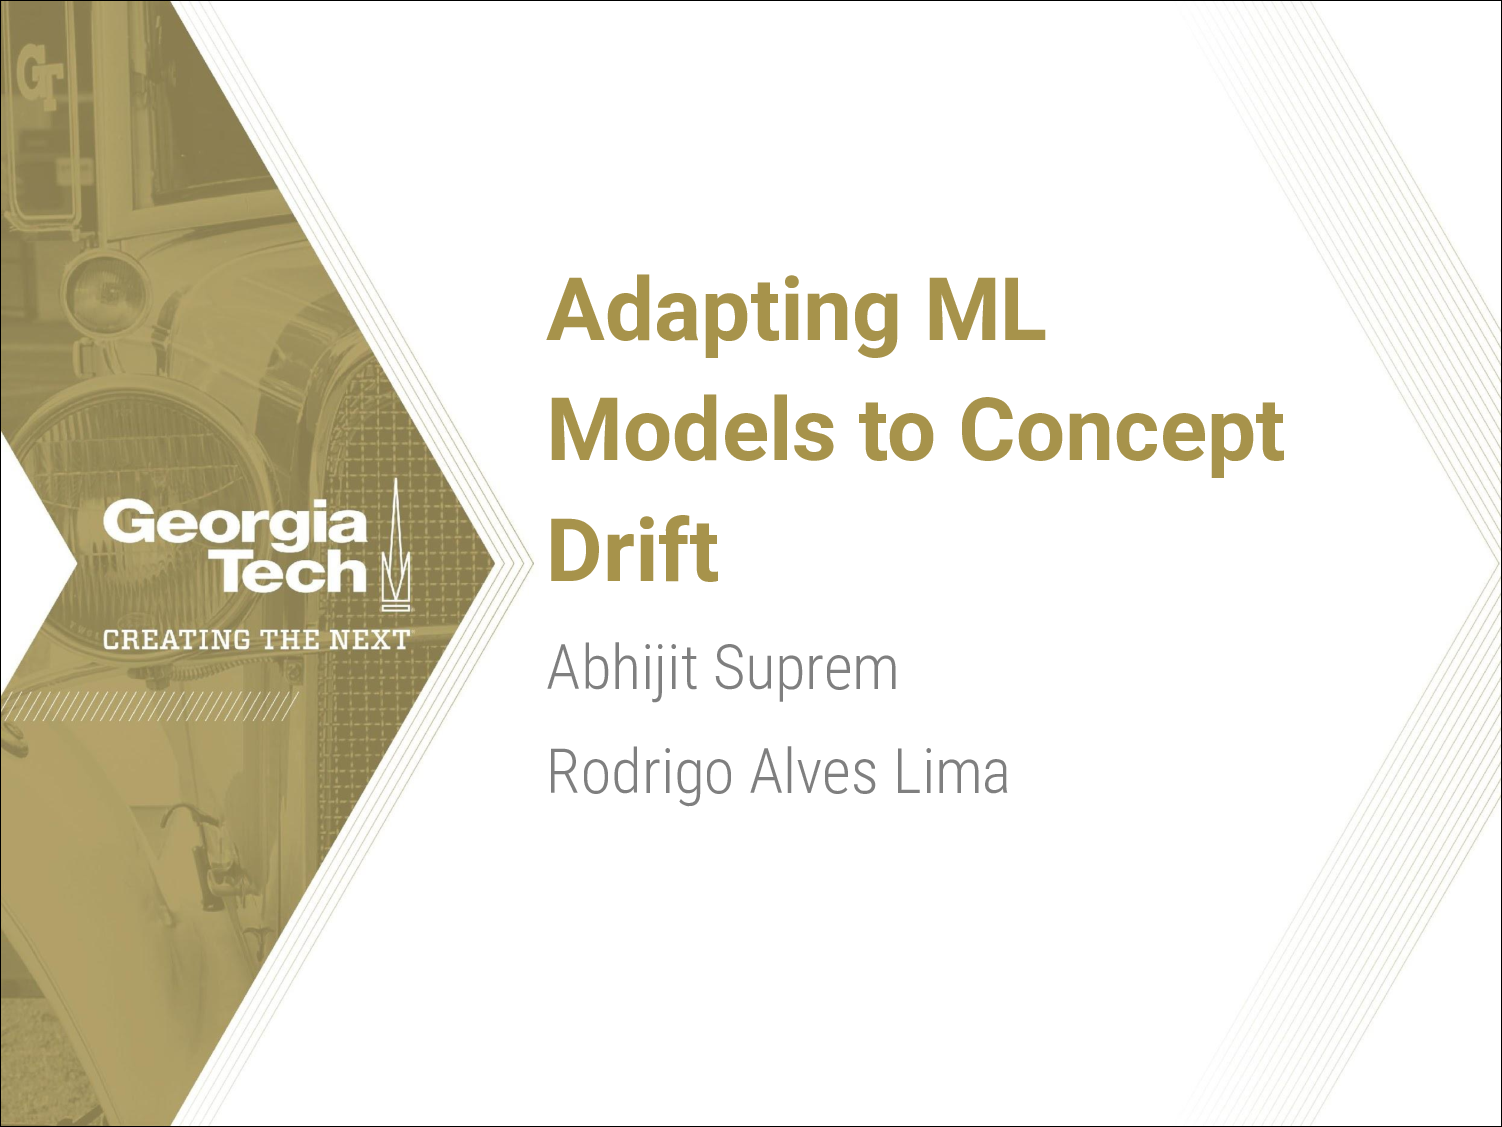 [PRESENTATION]  Adapting ML Models to Concept Drift